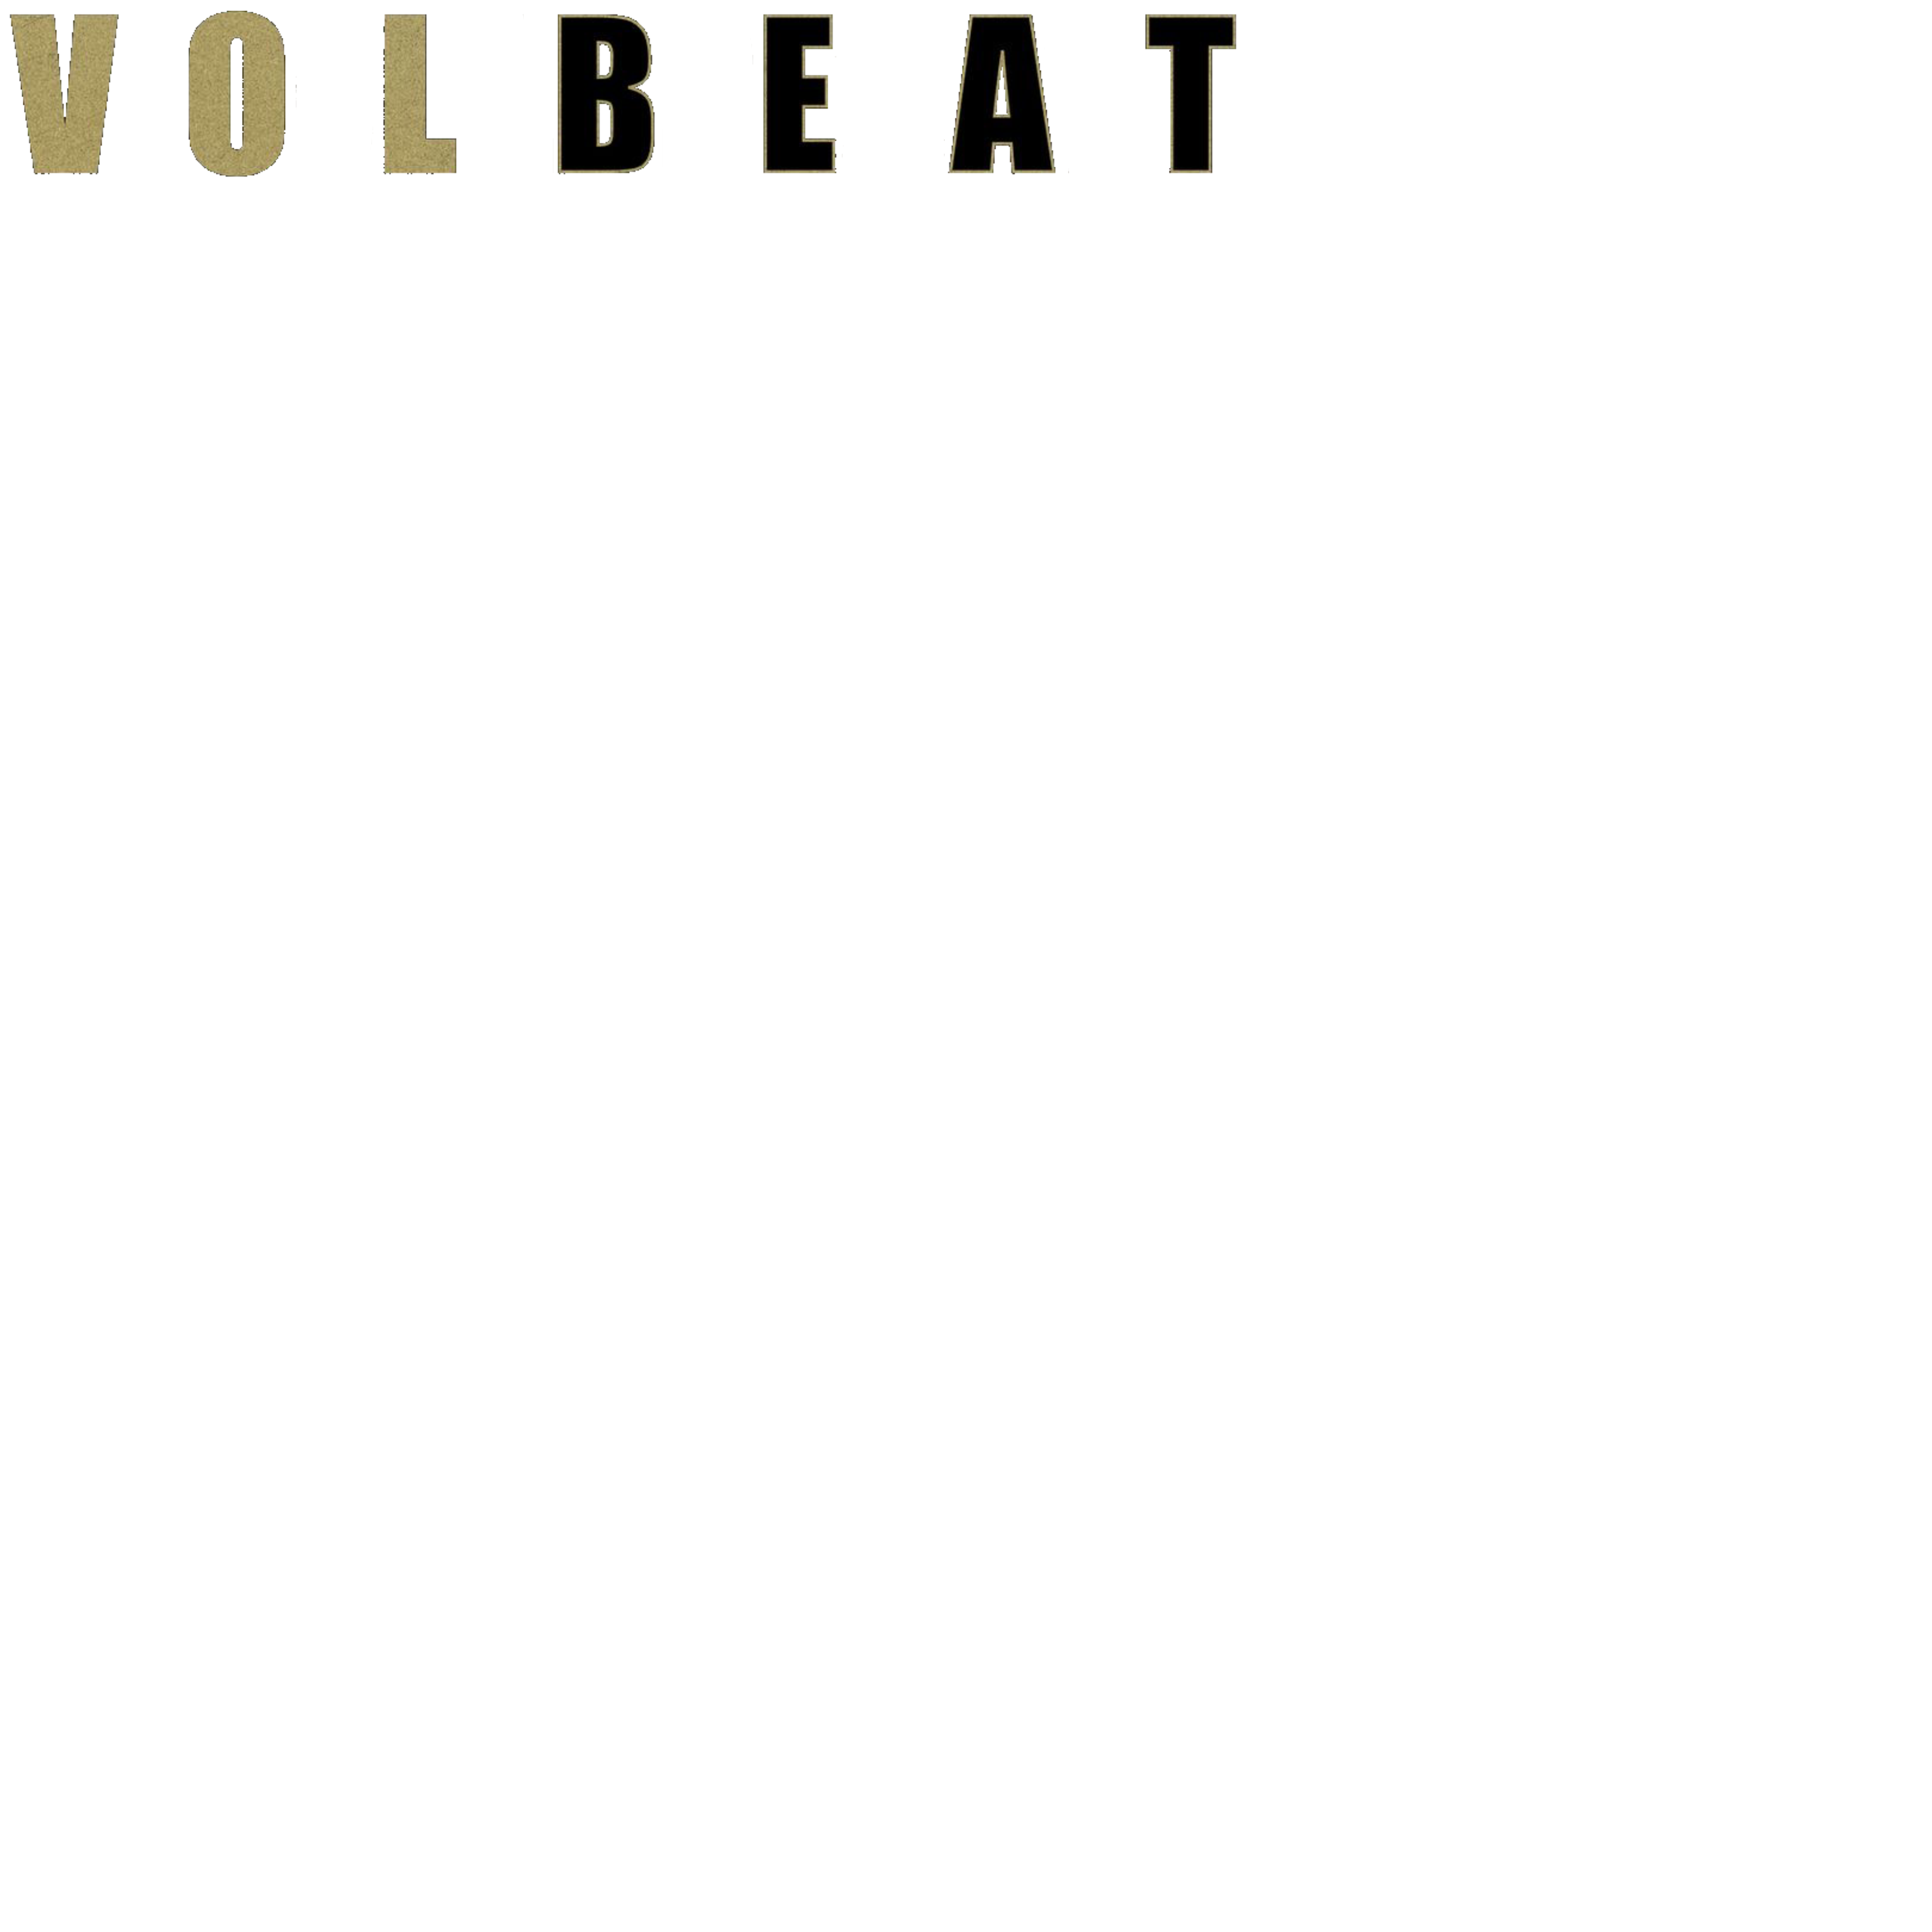 volbeat freetoedit #volbeat sticker by @aerdtke